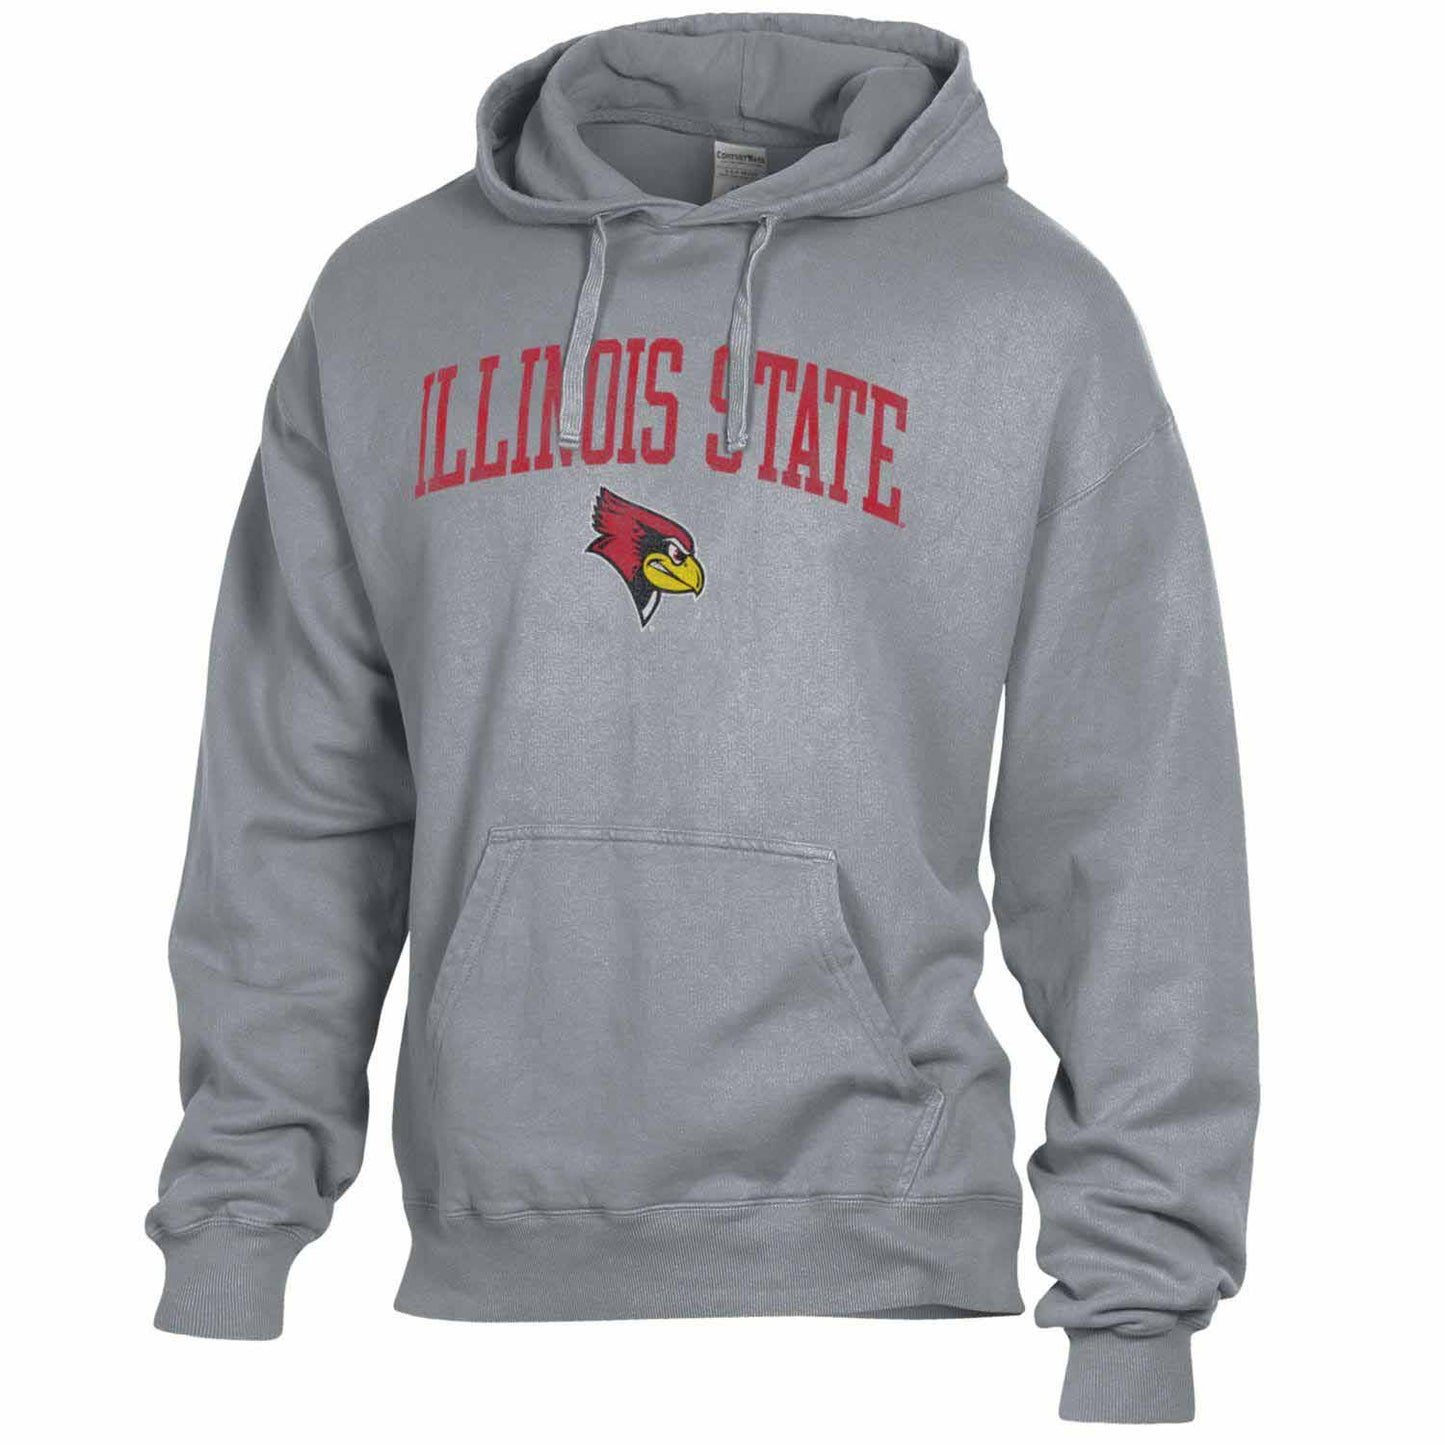 Illinois State Redbirds Illinois State Redbirds Adult Ultra Soft Comfort Wash Hooded Sweatshirt